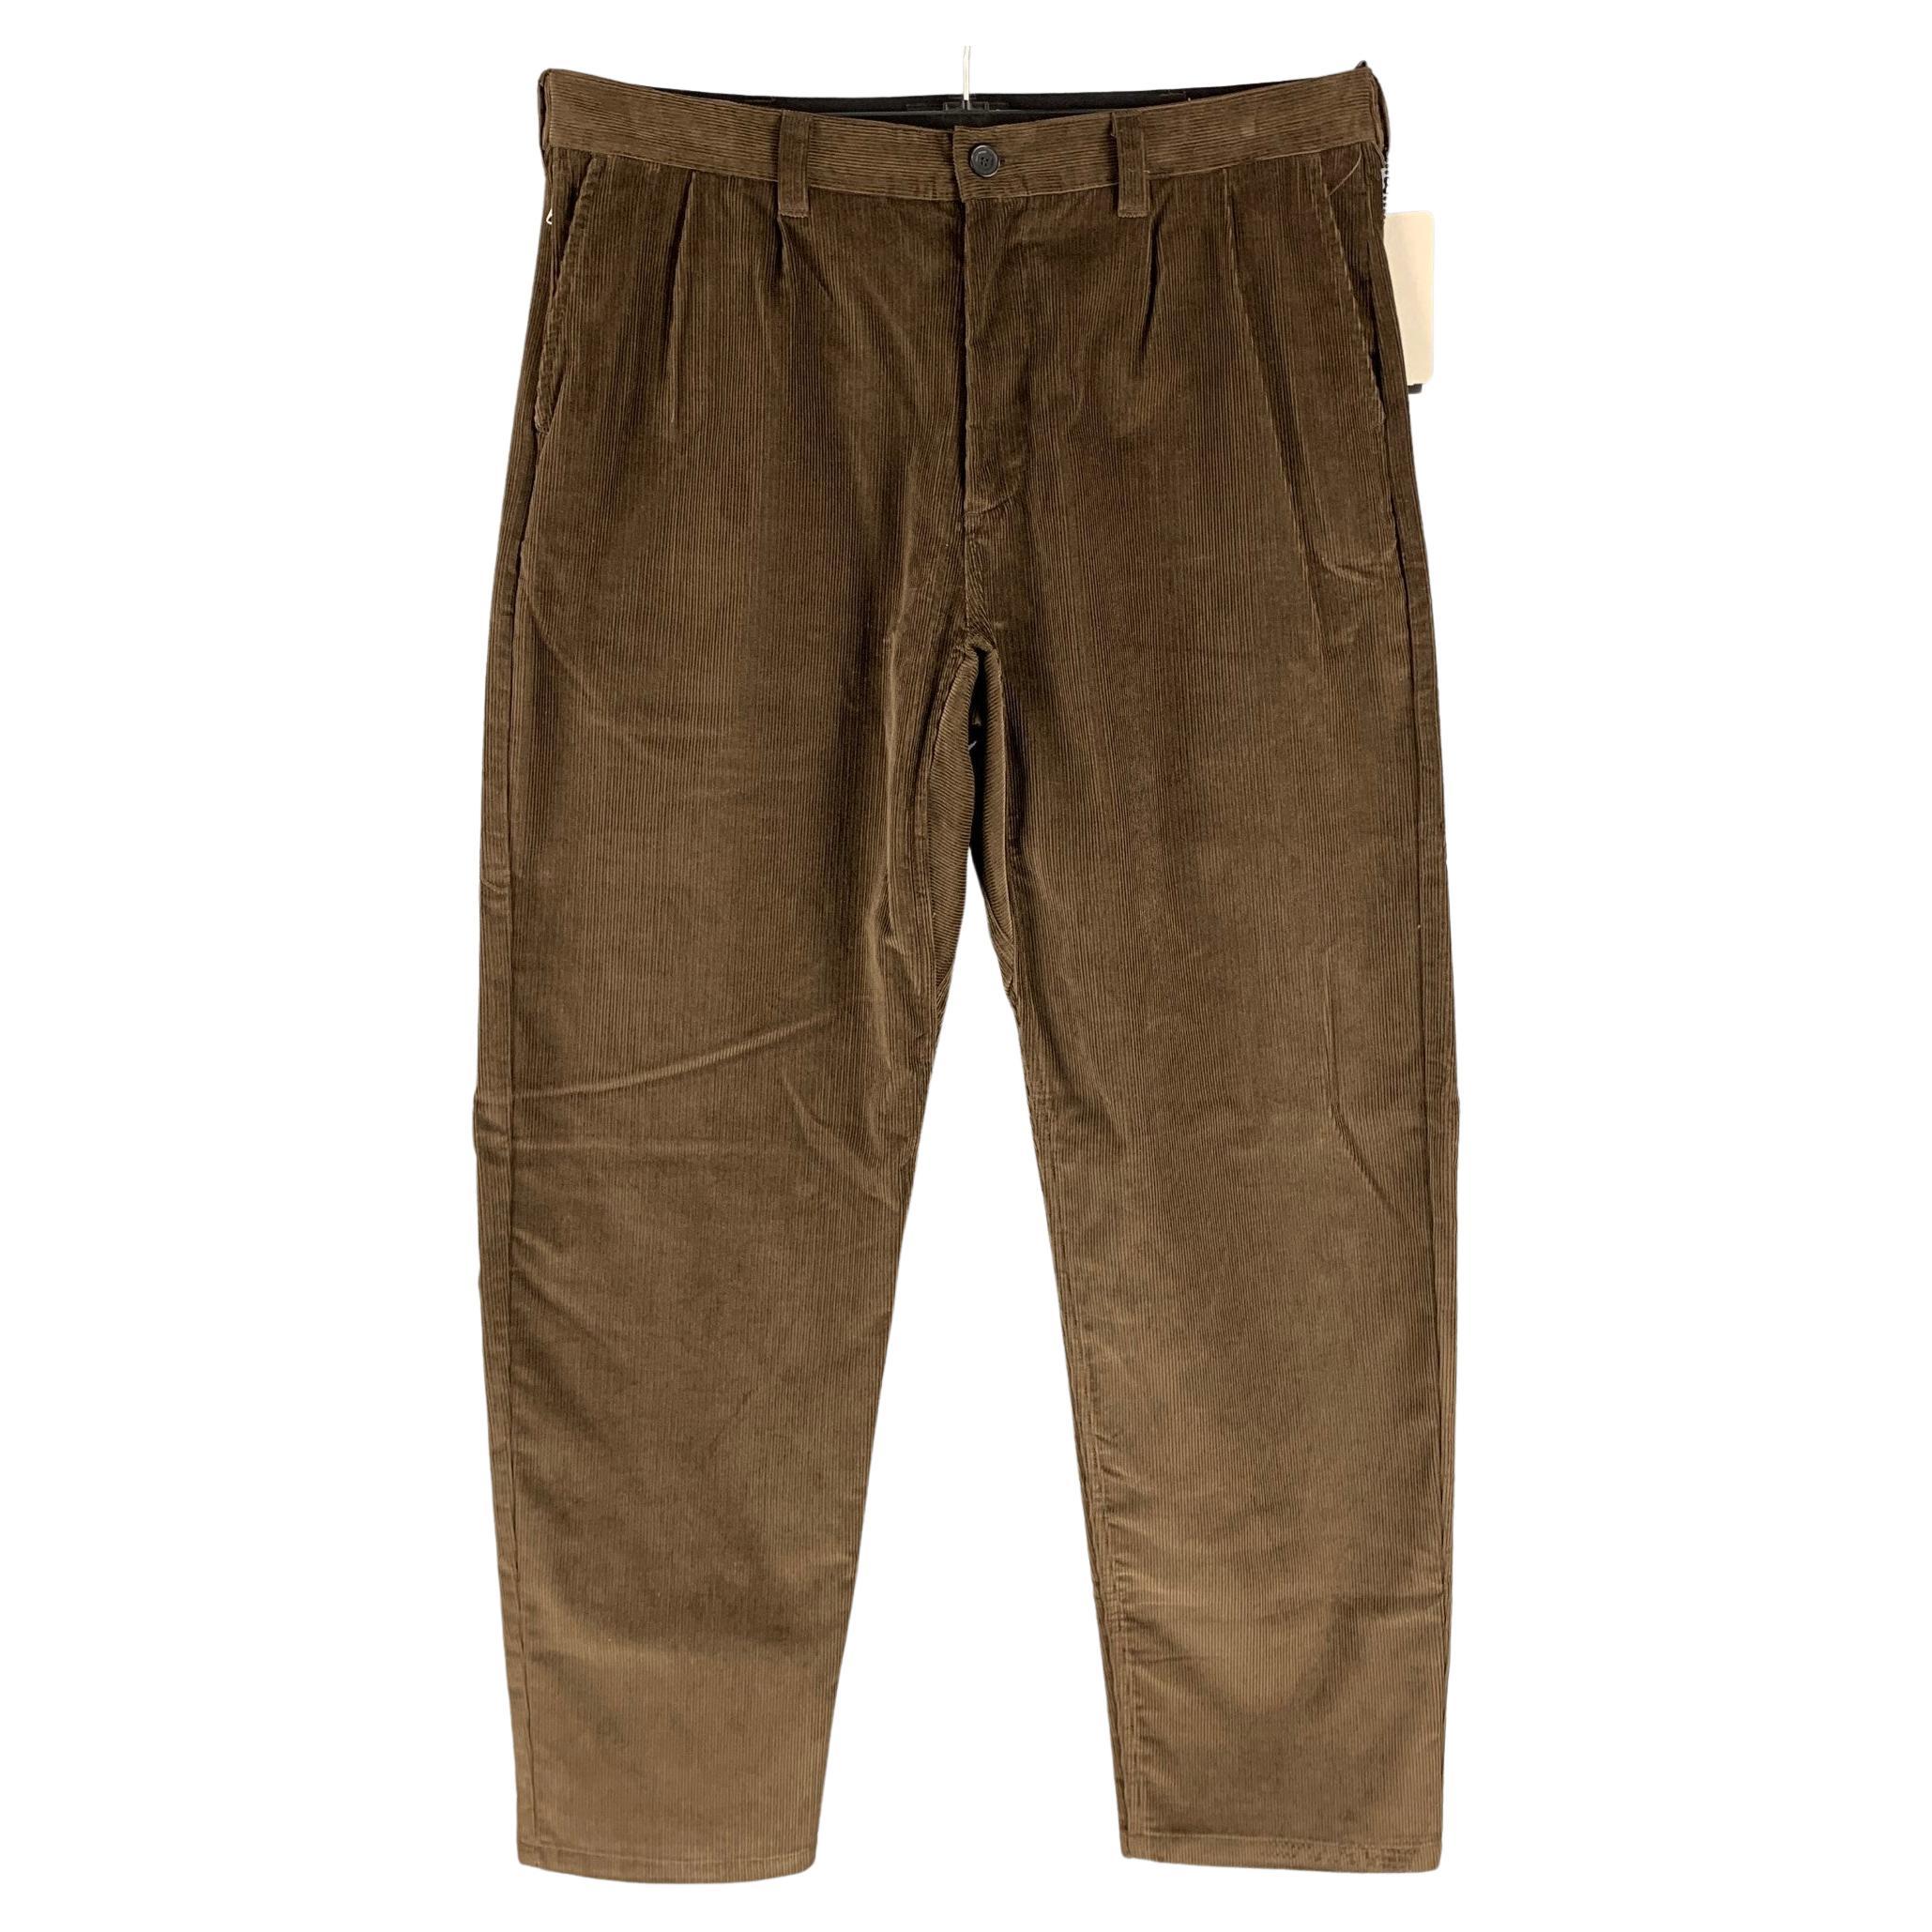 HAVEN Size L Brown Corduroy Cotton Zip Fly Casual Pants